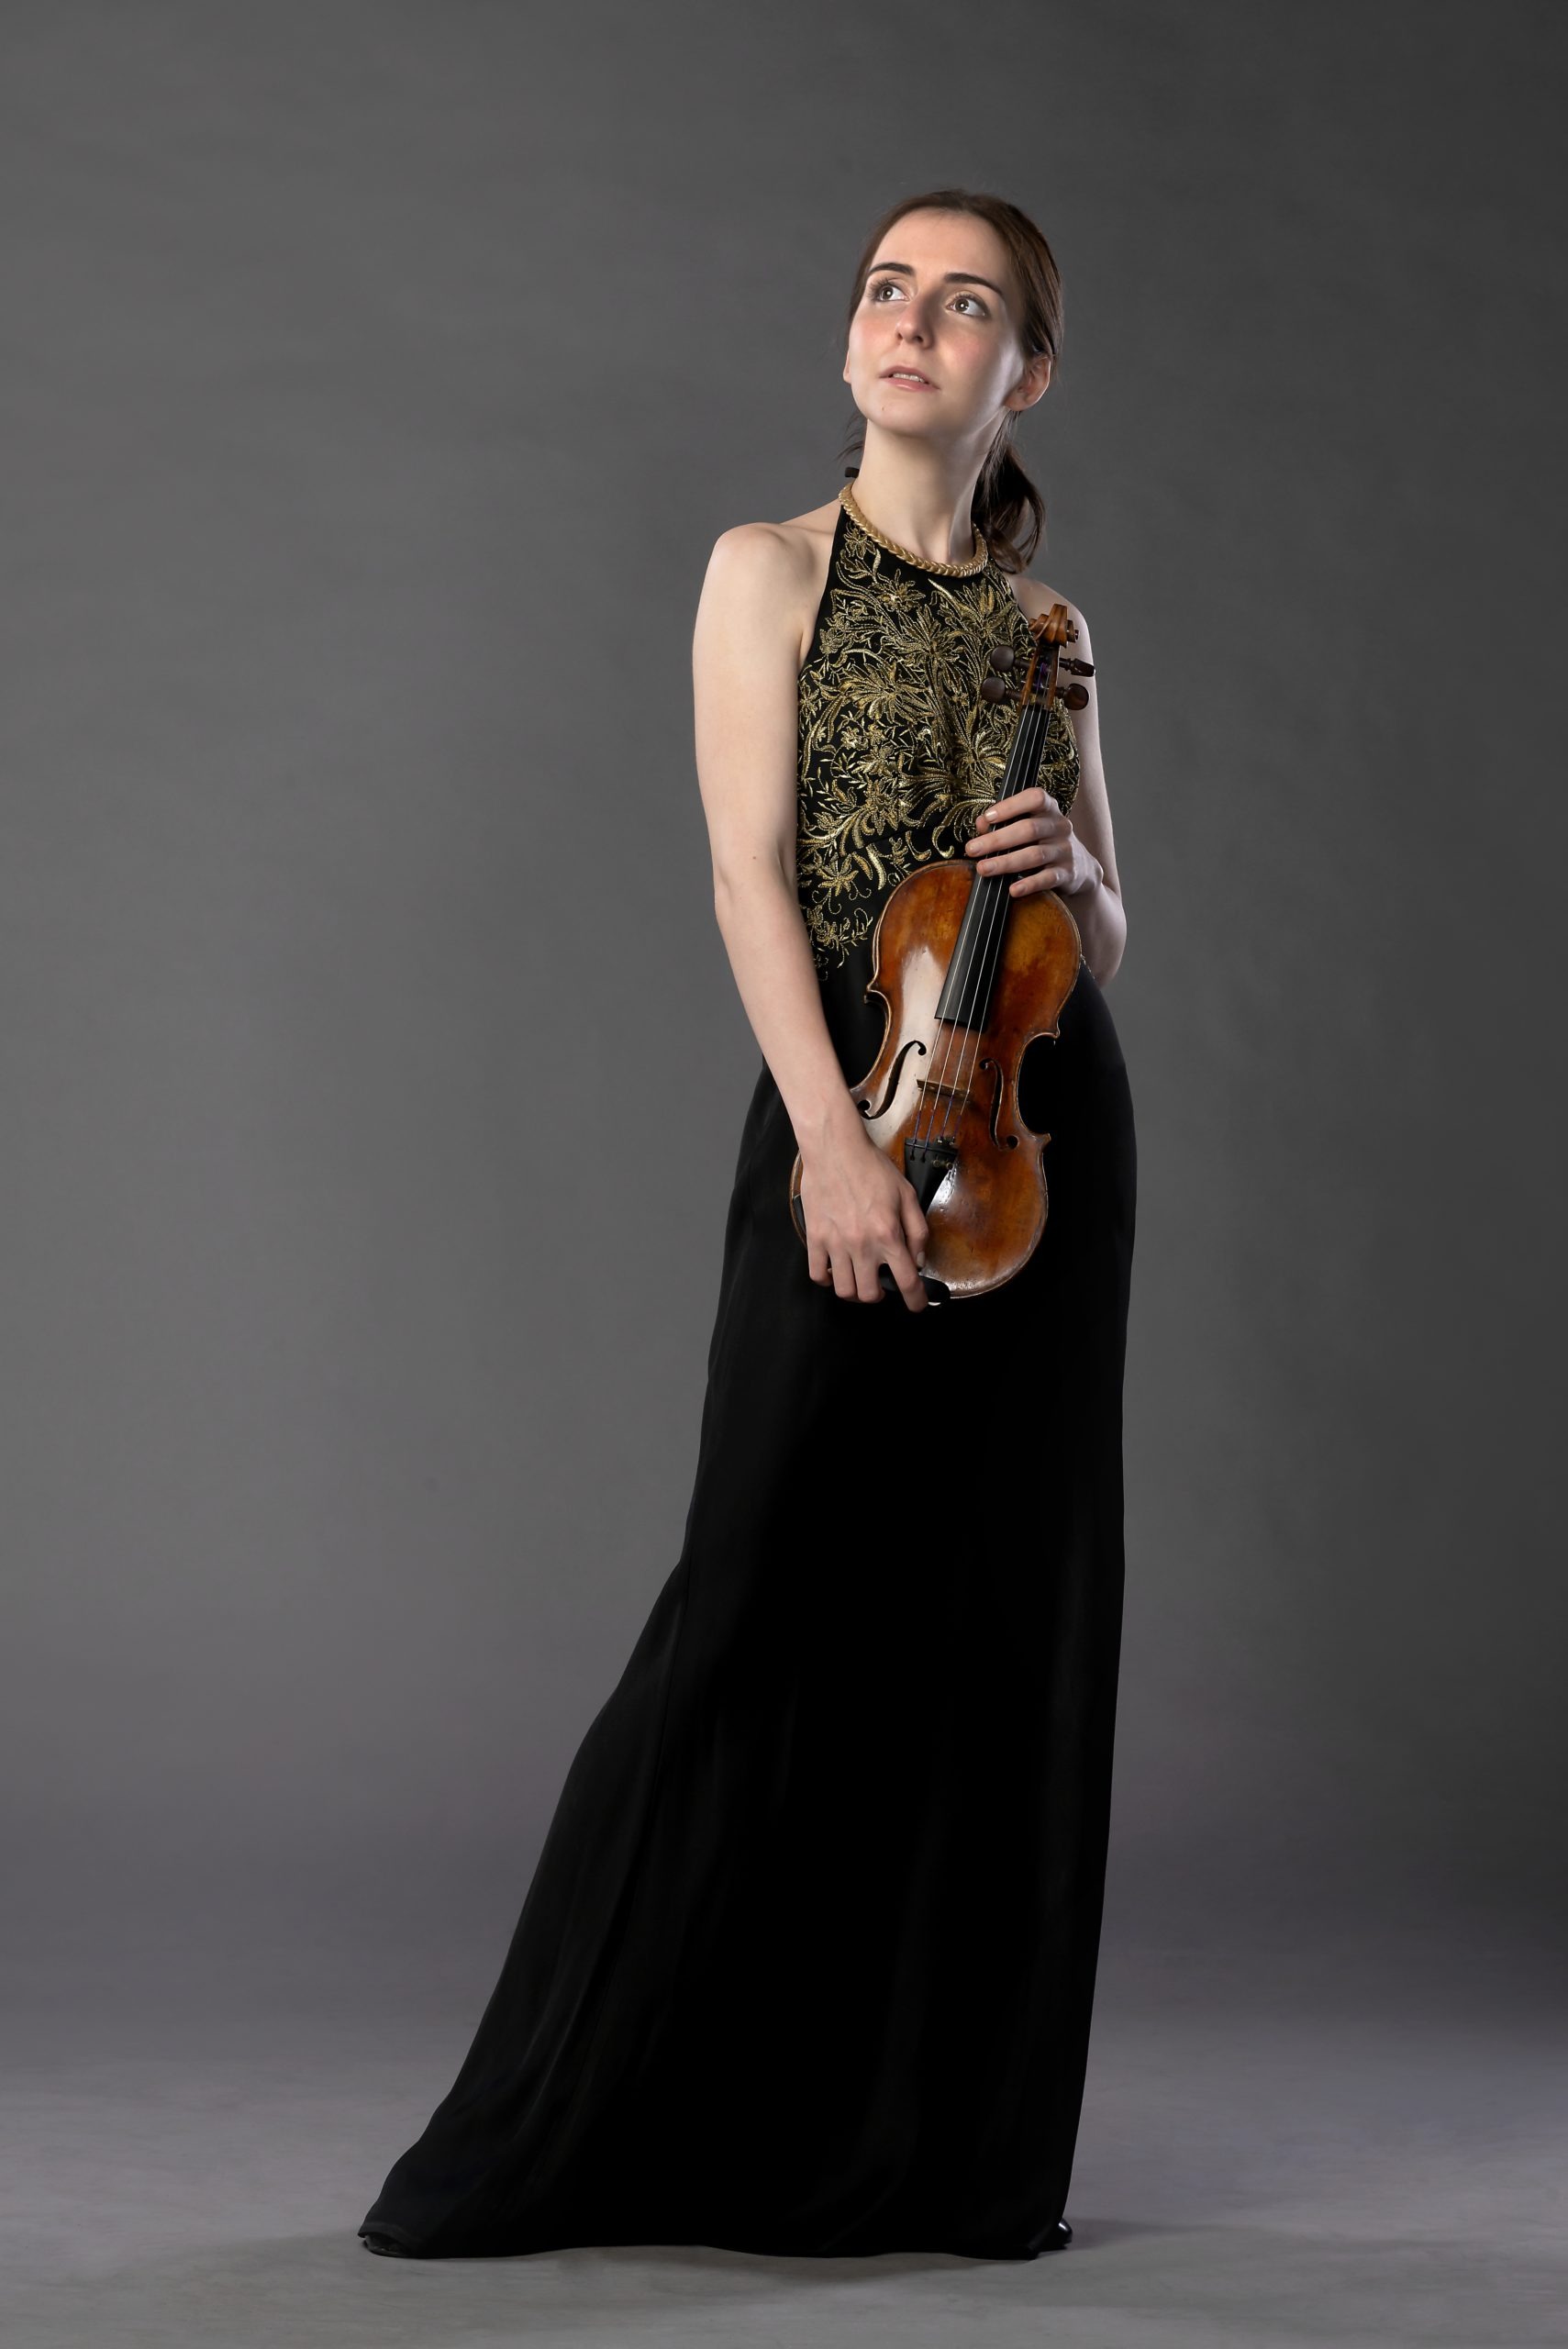 Diana Adamyan Violinist